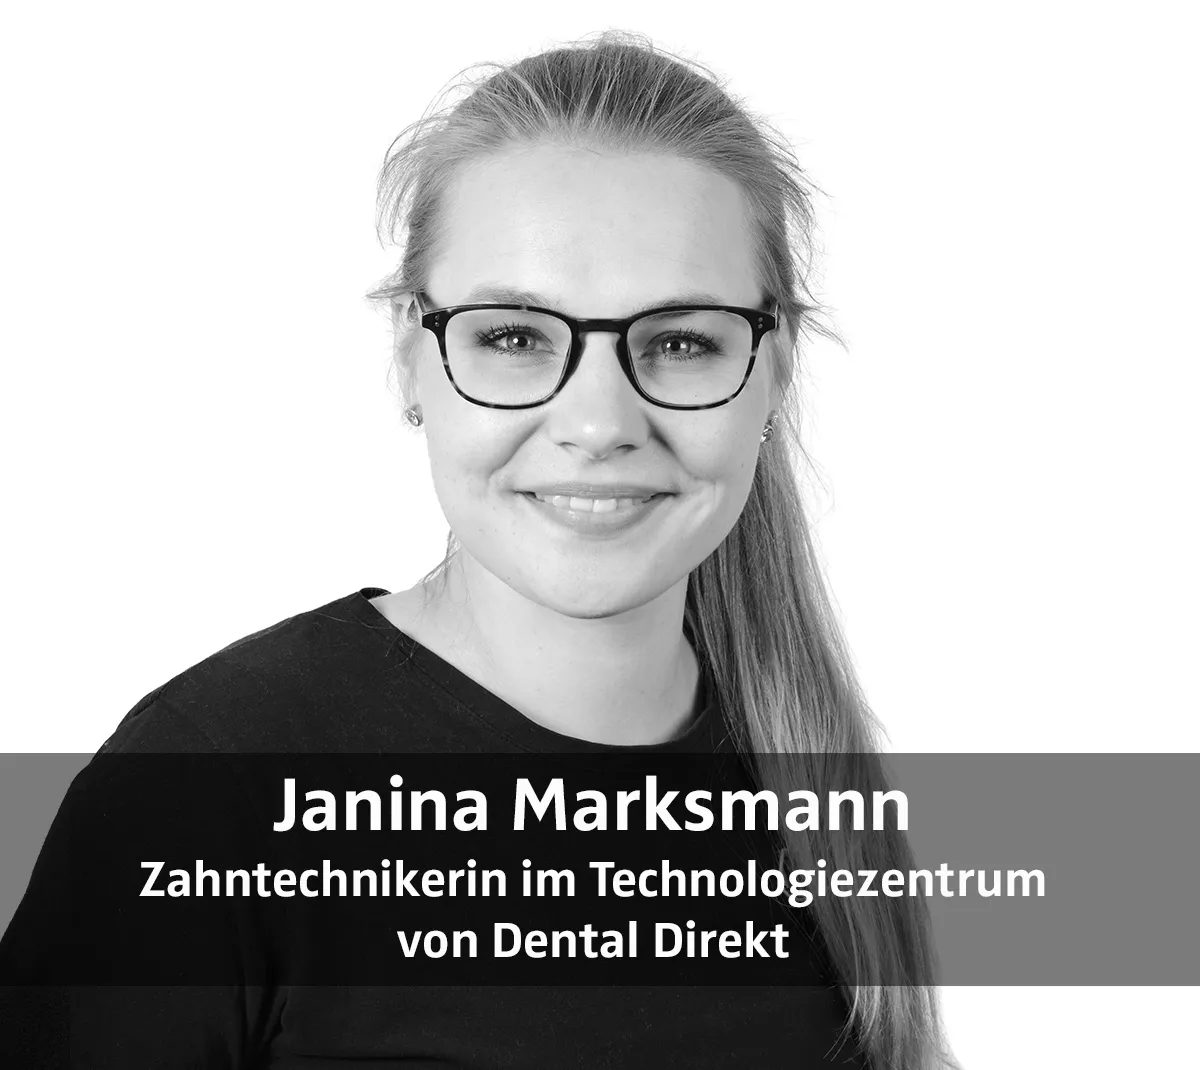 Janina Marksmann, Zahntechnikerin